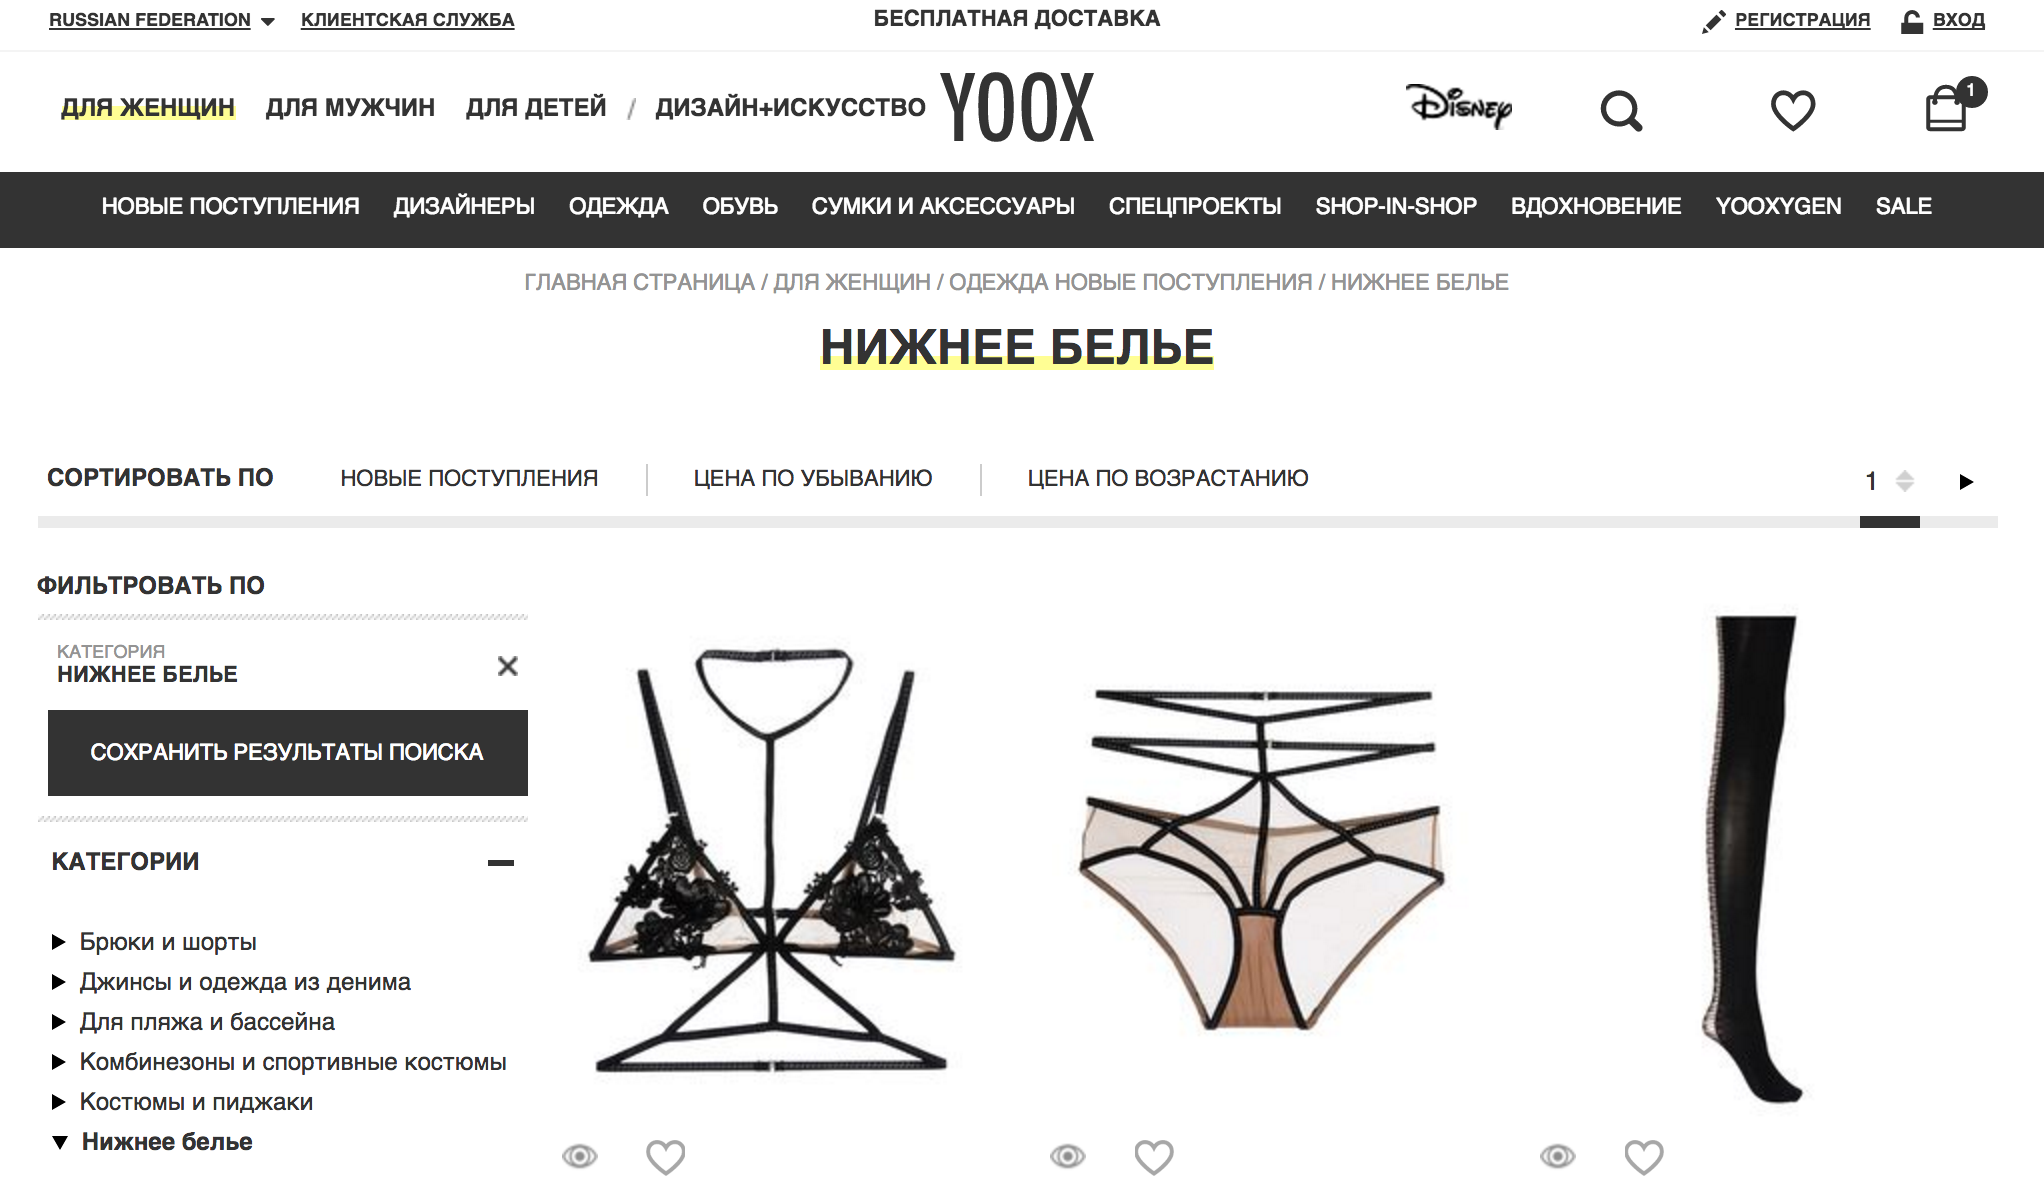 YOOX: Обзор онлайн-площадки с интересными фэшн-брендами и нижним бельём